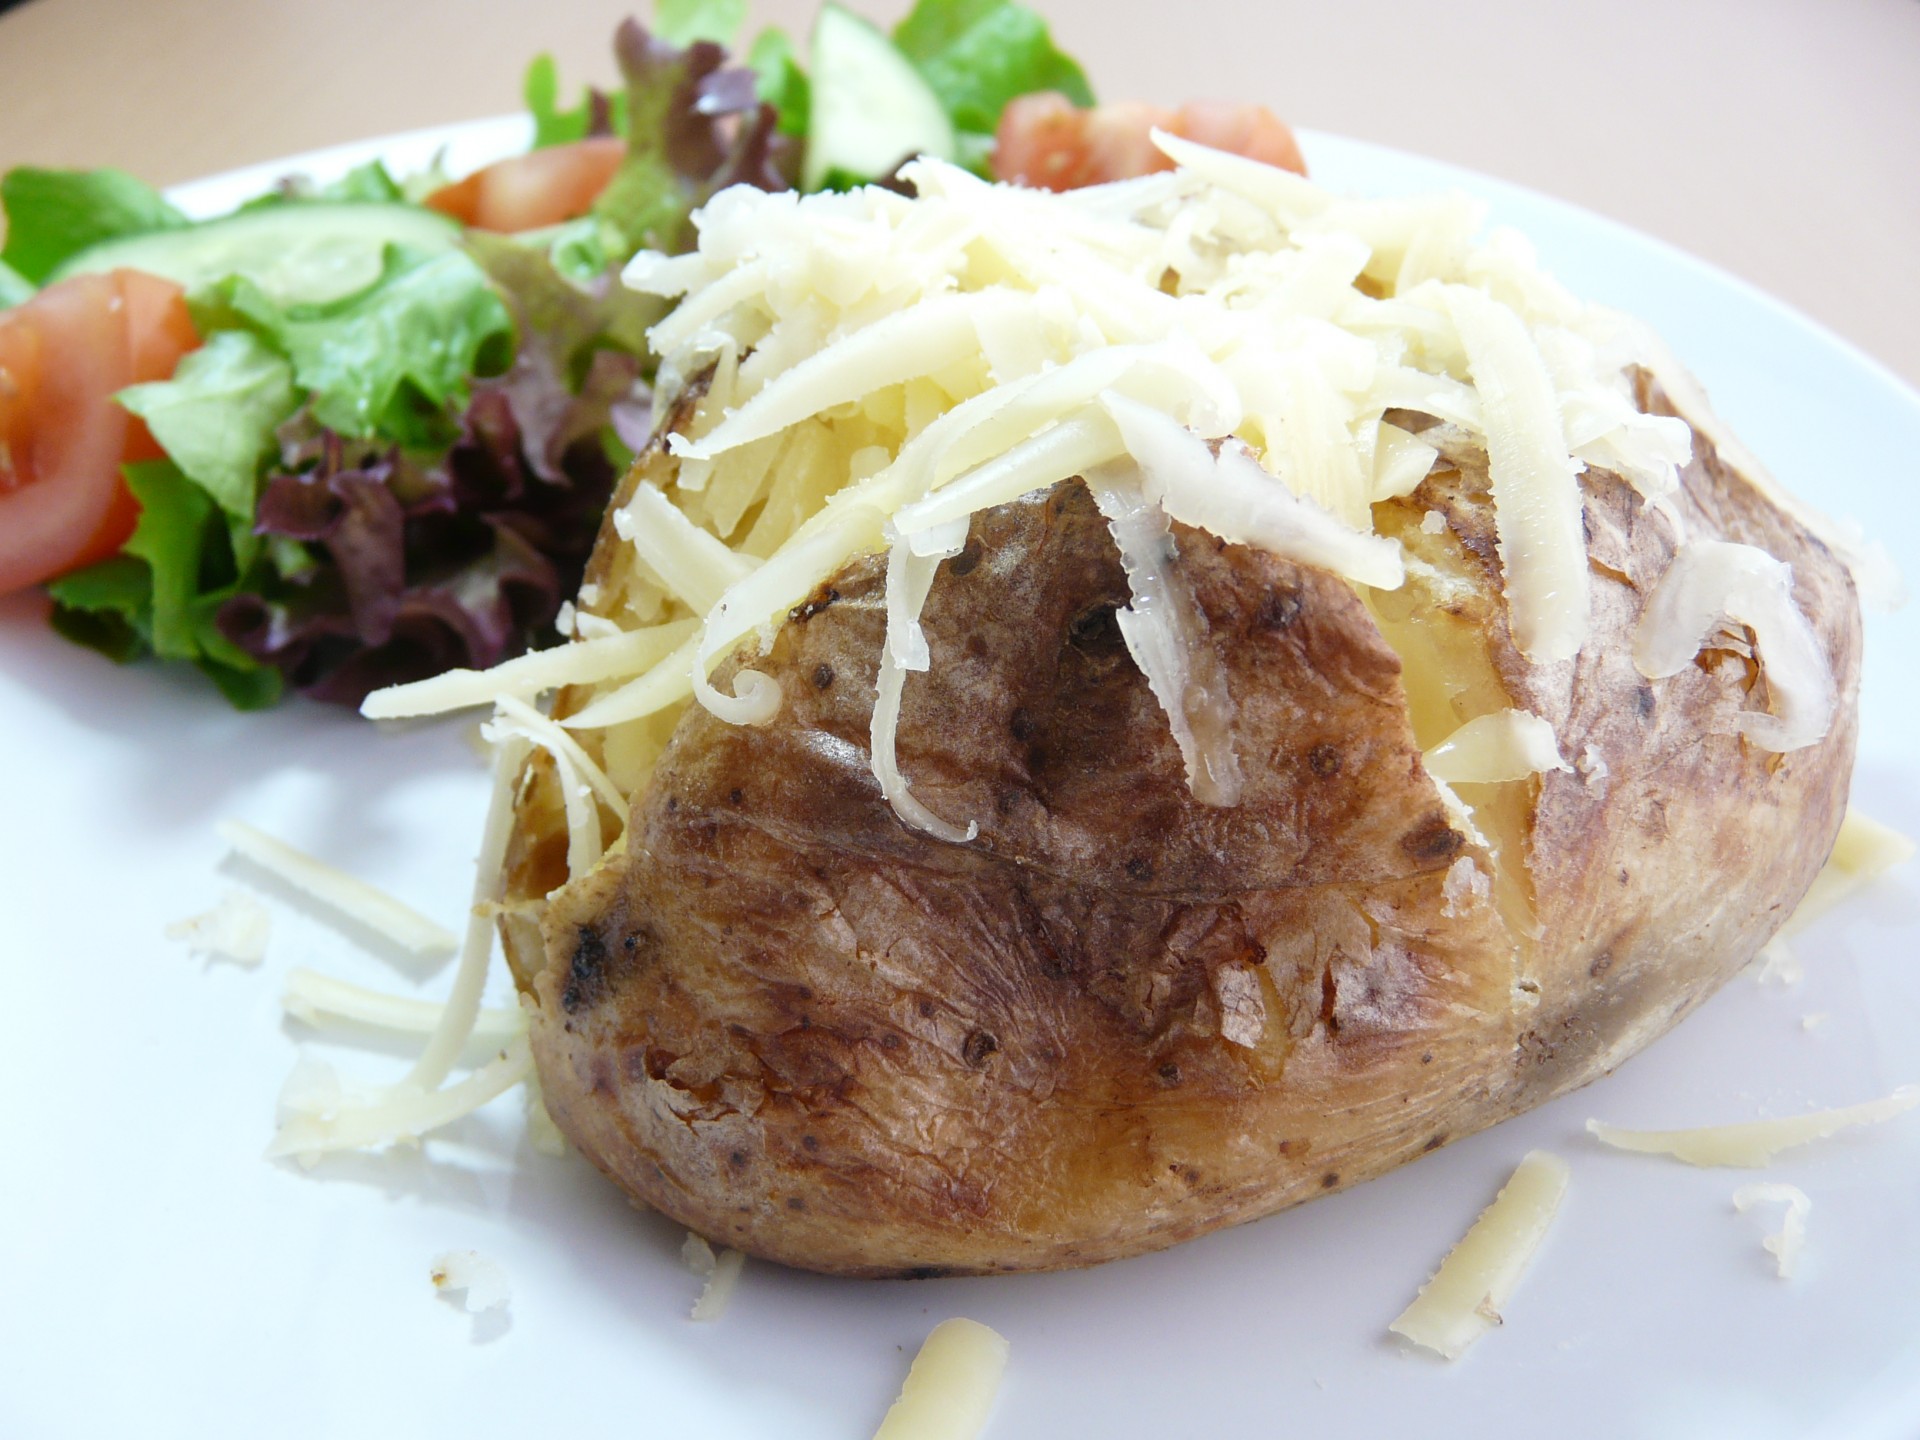 Jacket Potato Baked Potato with cheese and salad